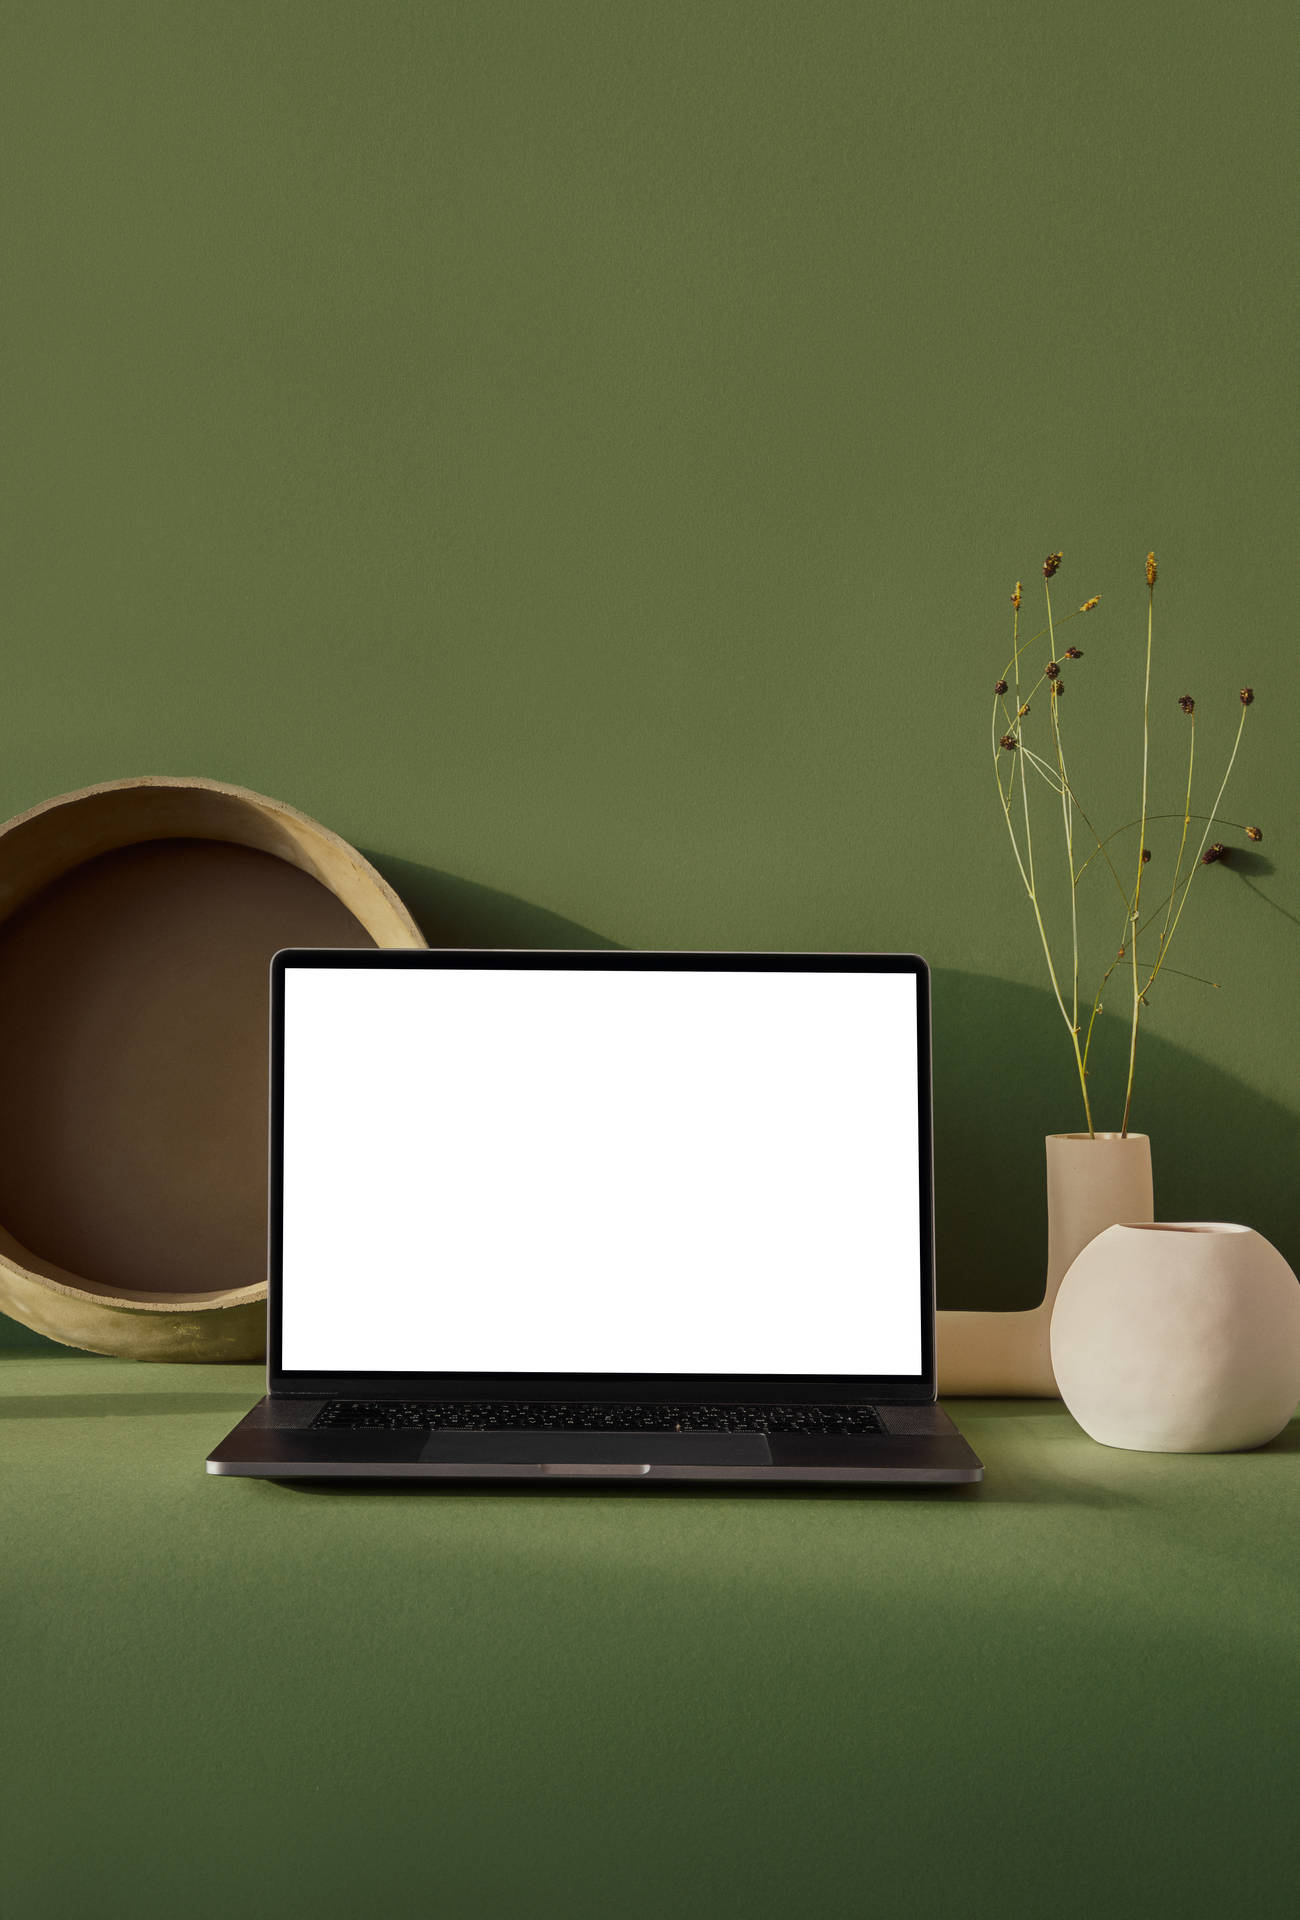 Aesthetic Tumblr Laptop Olive Green Background